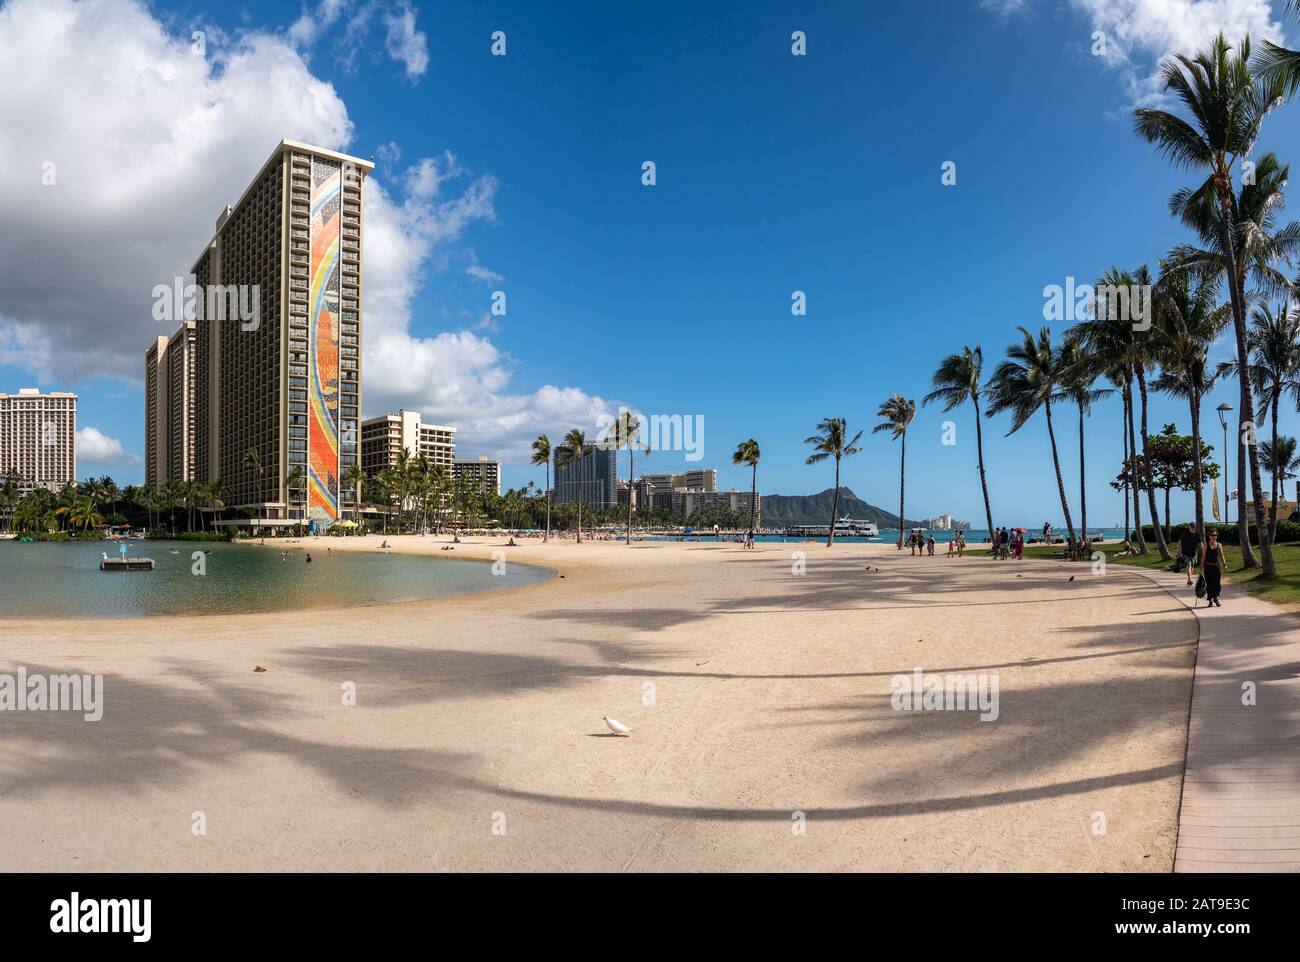 Waikiki, HI - 19 Gennaio 2020: Hilton Rainbow Tower di fronte al litorale verso Diamond Head Foto Stock